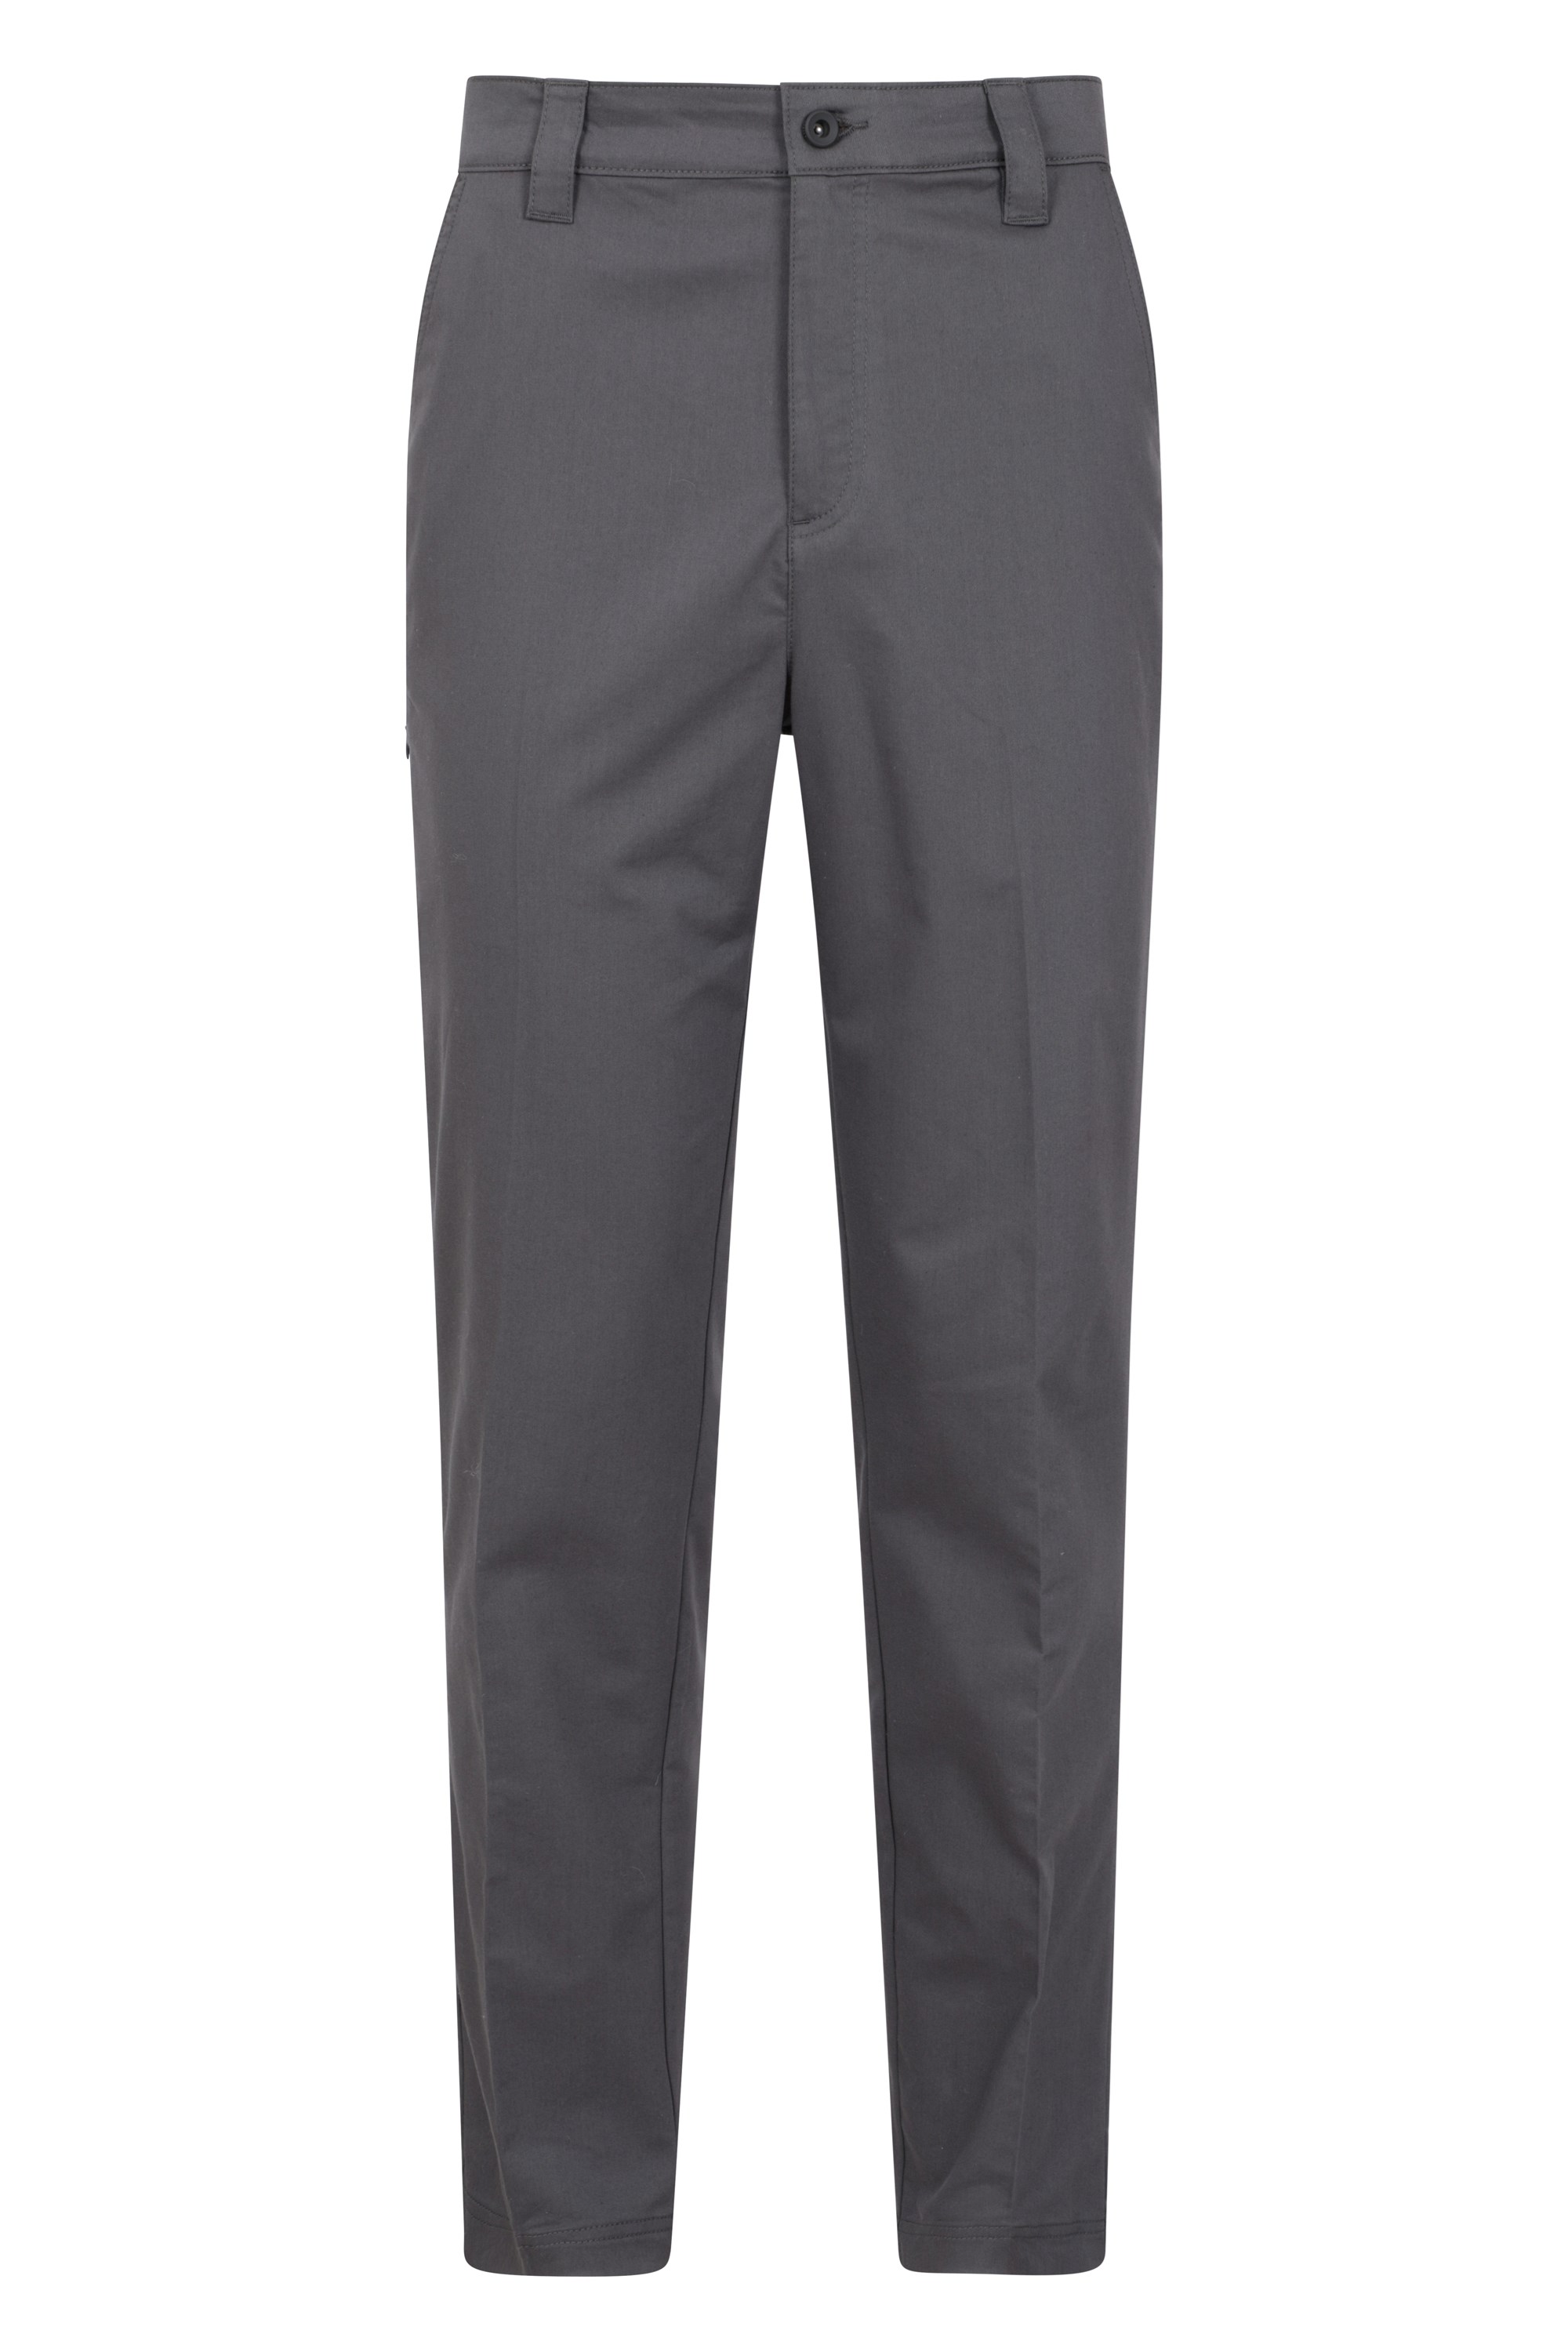 Mens Sweat Wicking Golf Trousers - Short Length - Grey